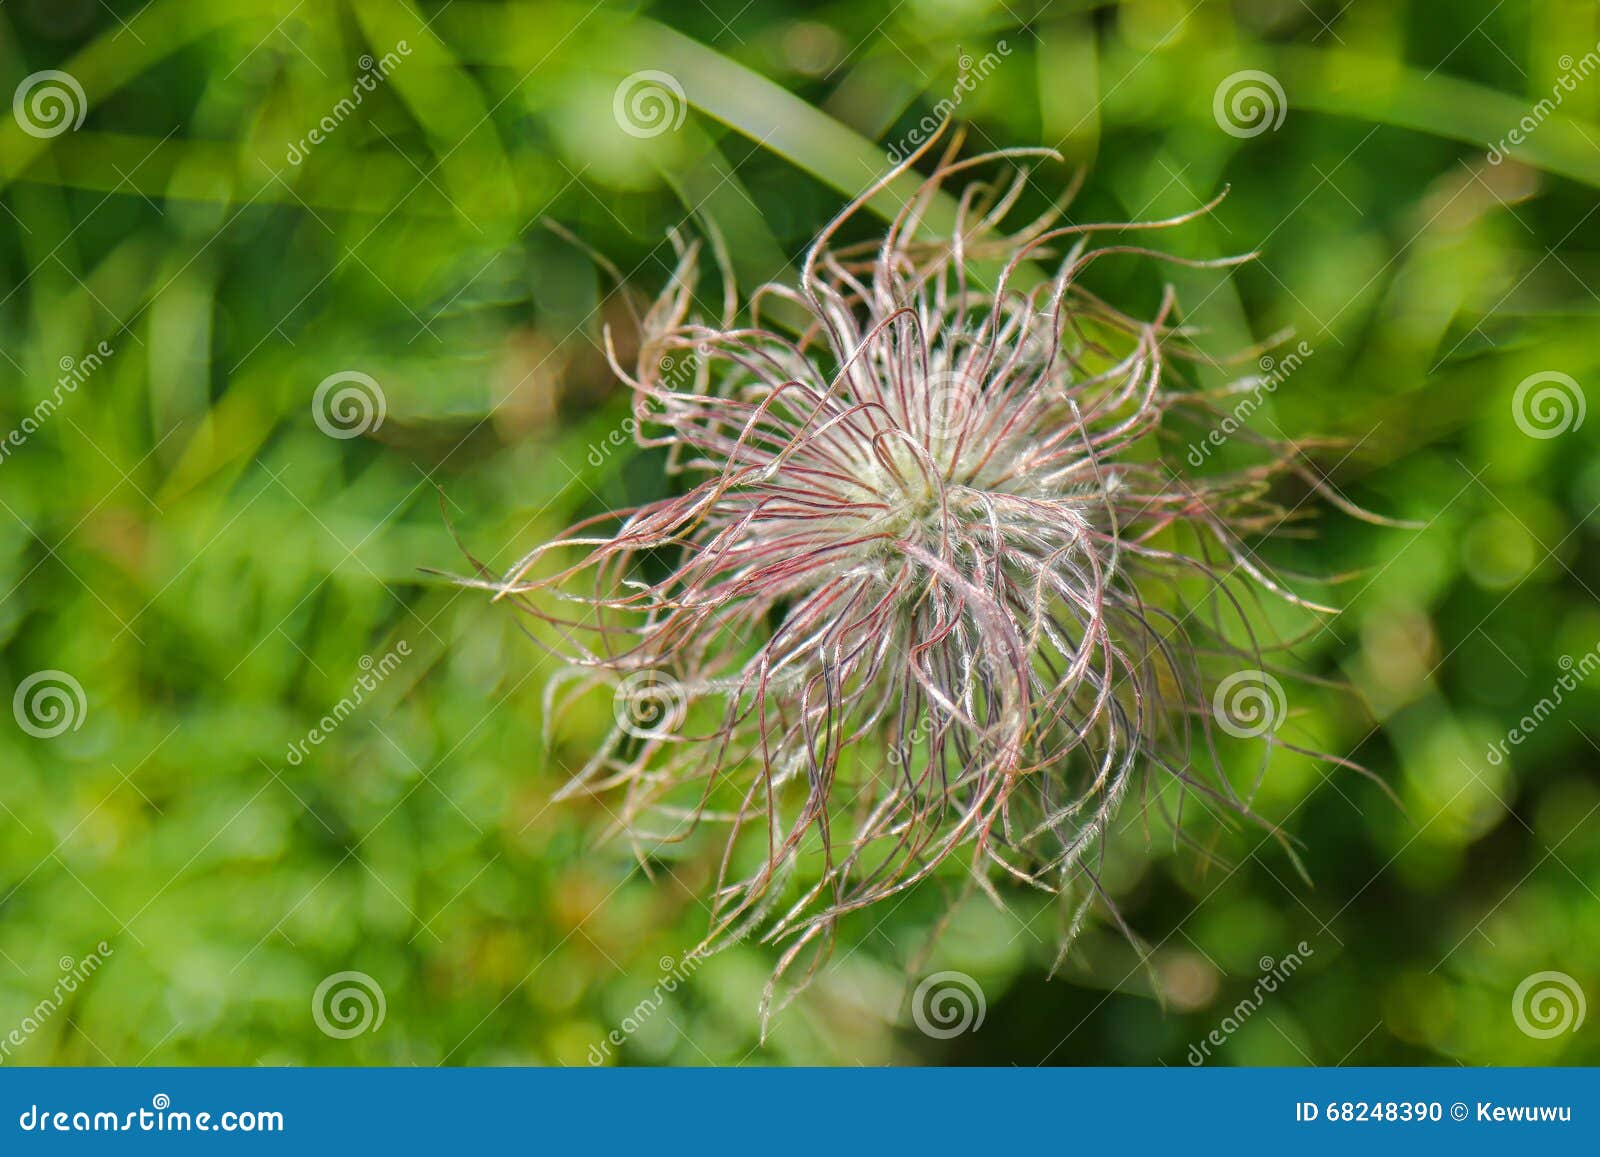 pulsatilla alpina flower during summer in europe